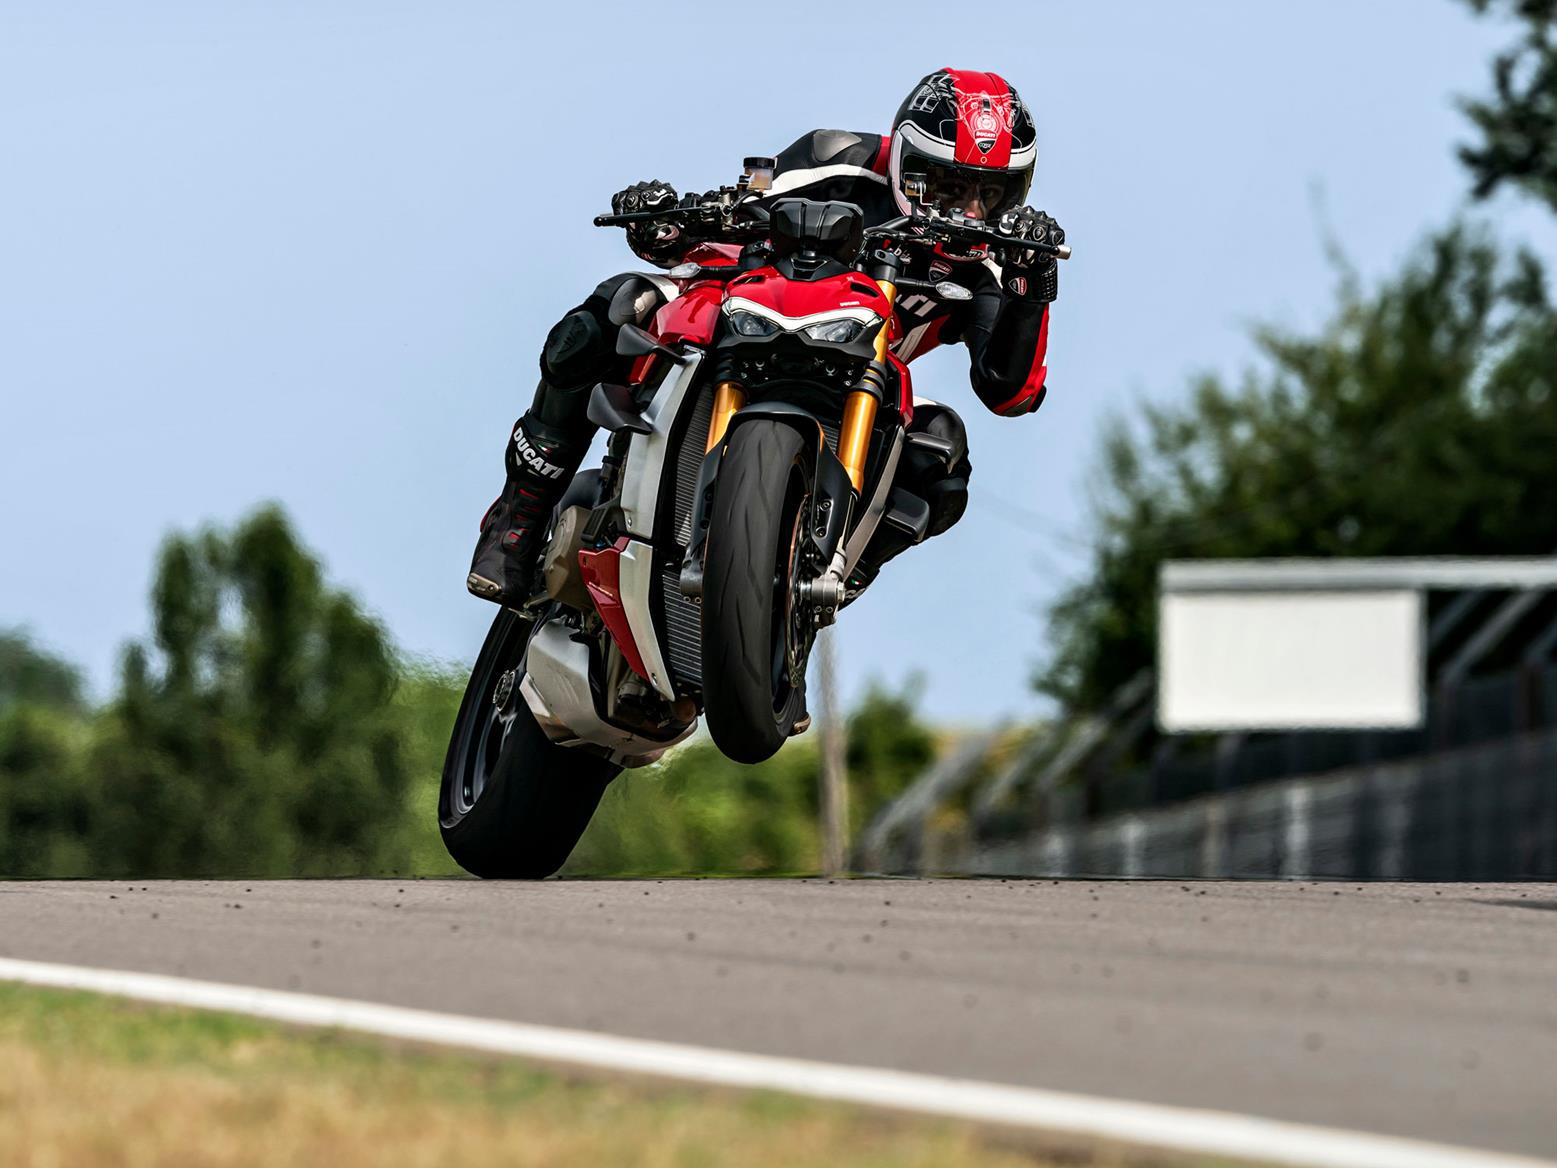 Ducati Streetfighter V4: the story